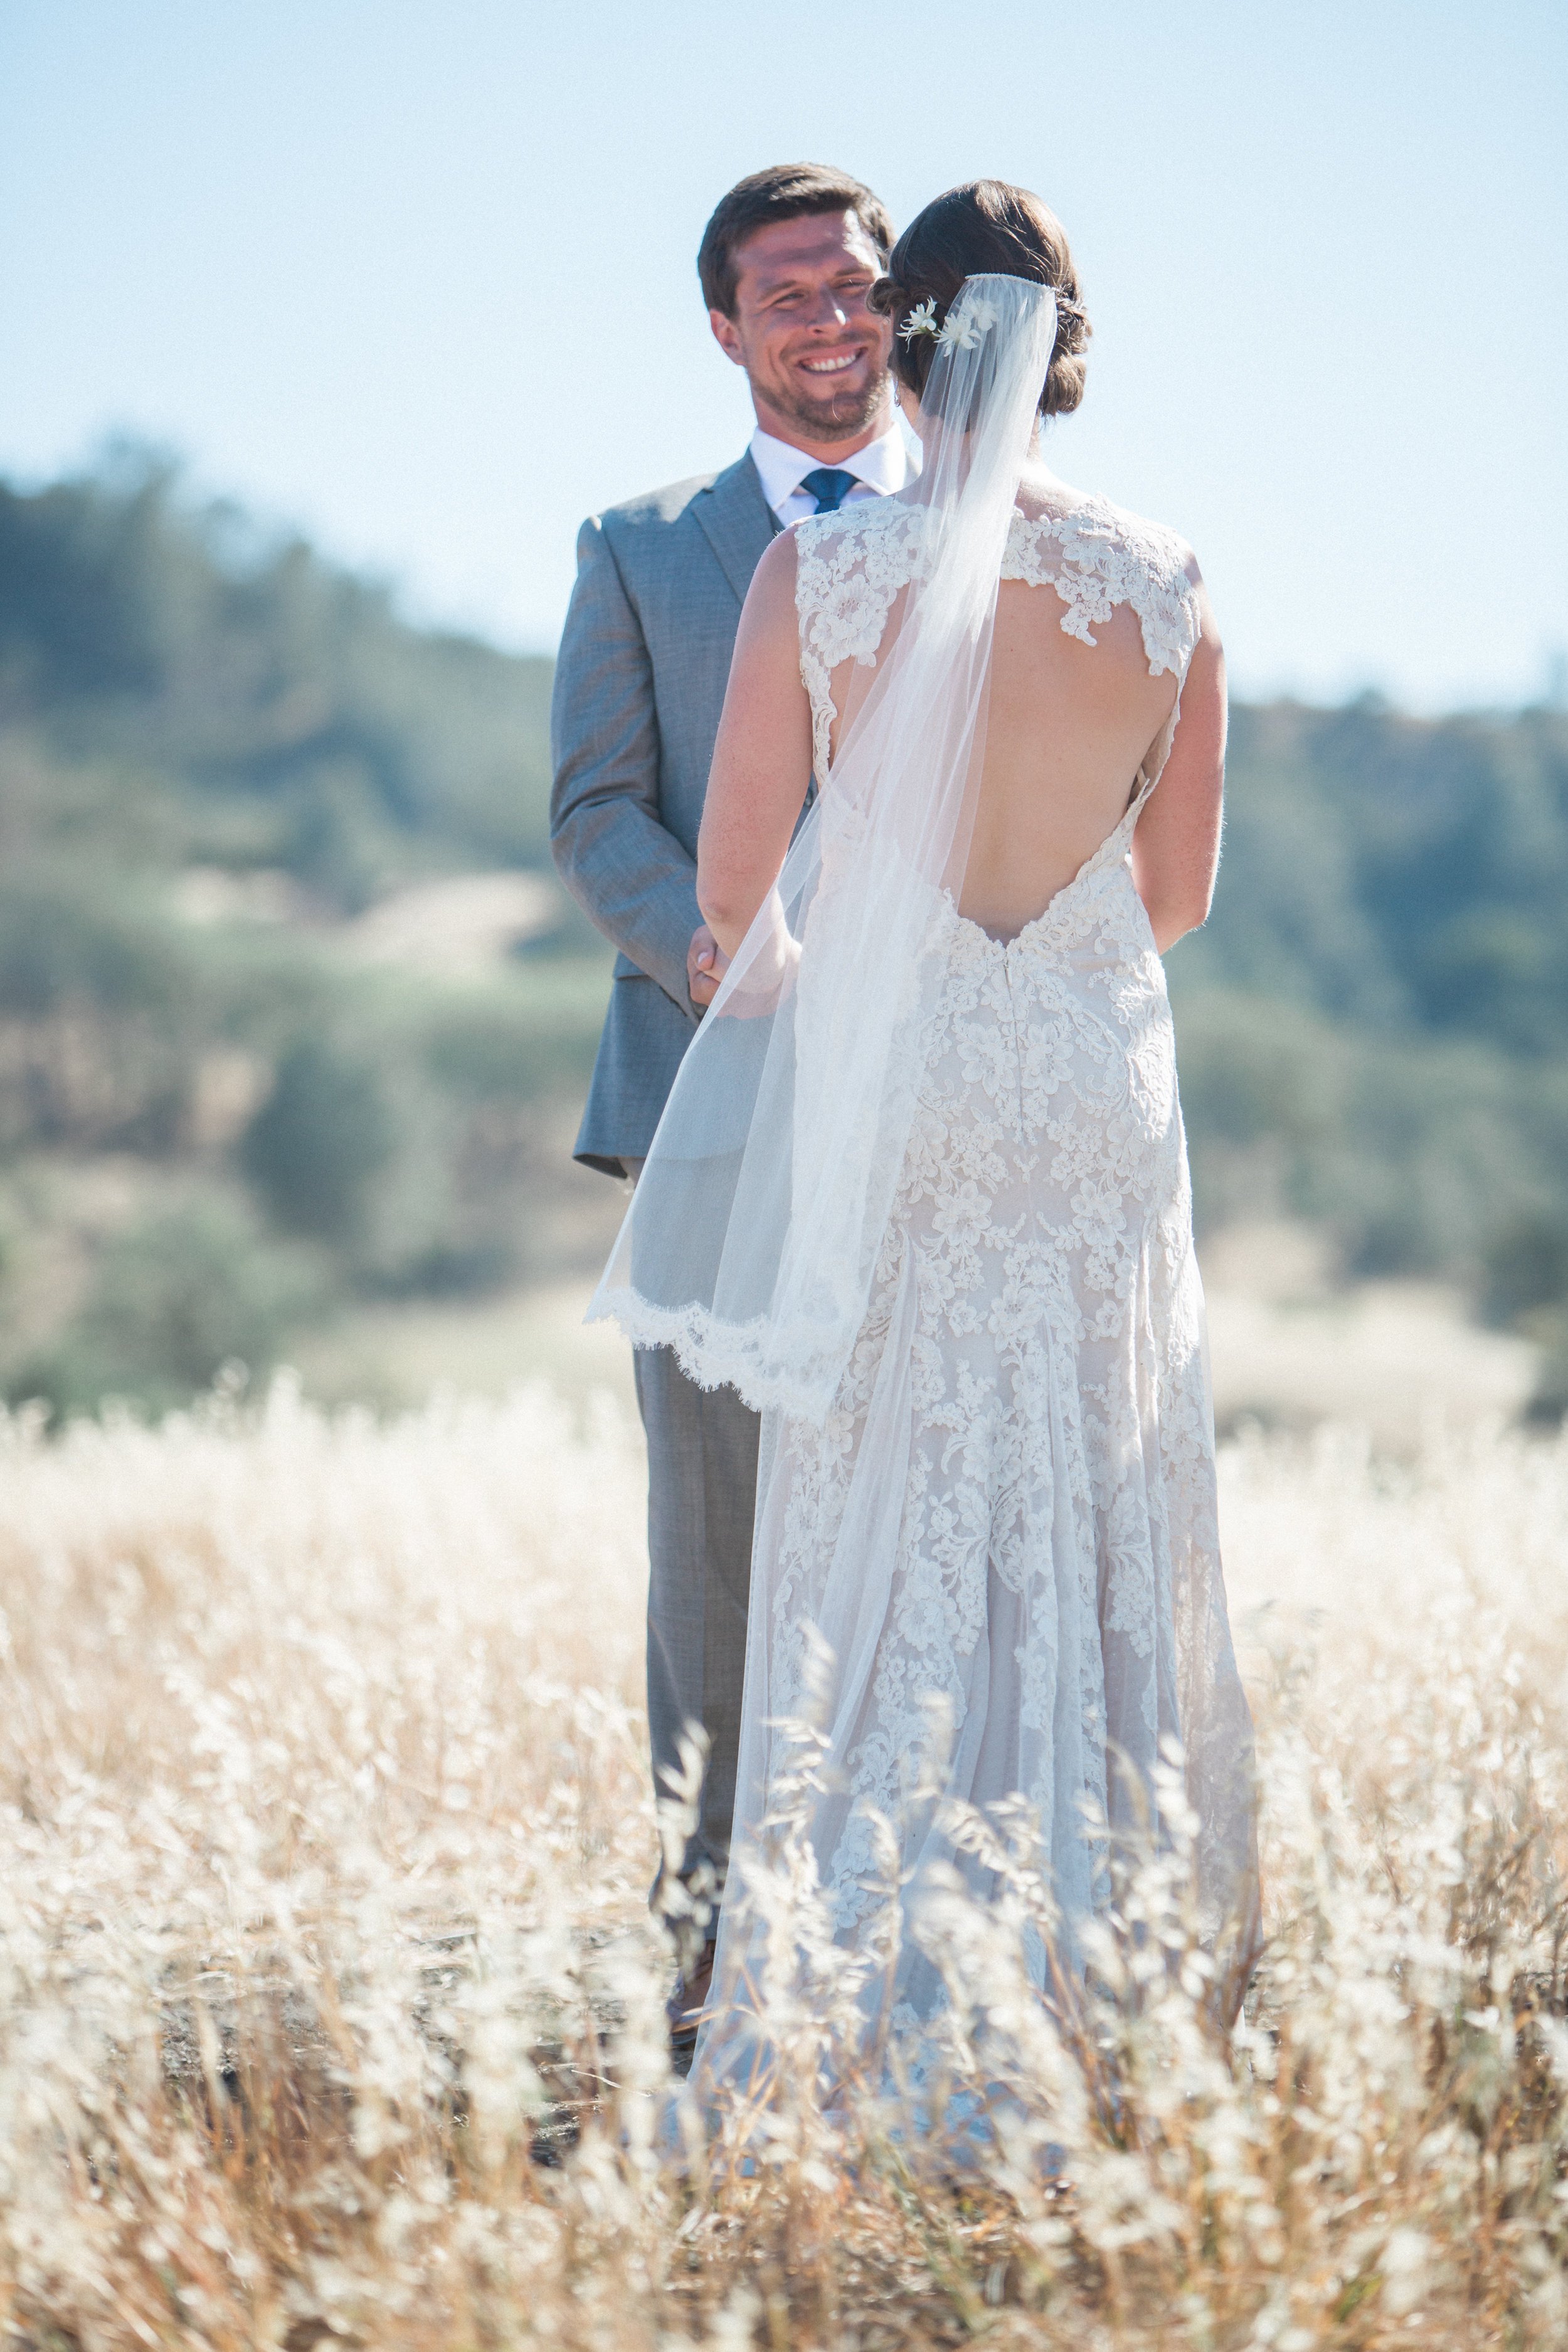 www.santabarbarawedding.com | Kiel Rucker Photography | Joelle Charming Wedding Planner | Figueroa Mountain Farmhouse | Al Fresco Ceremony